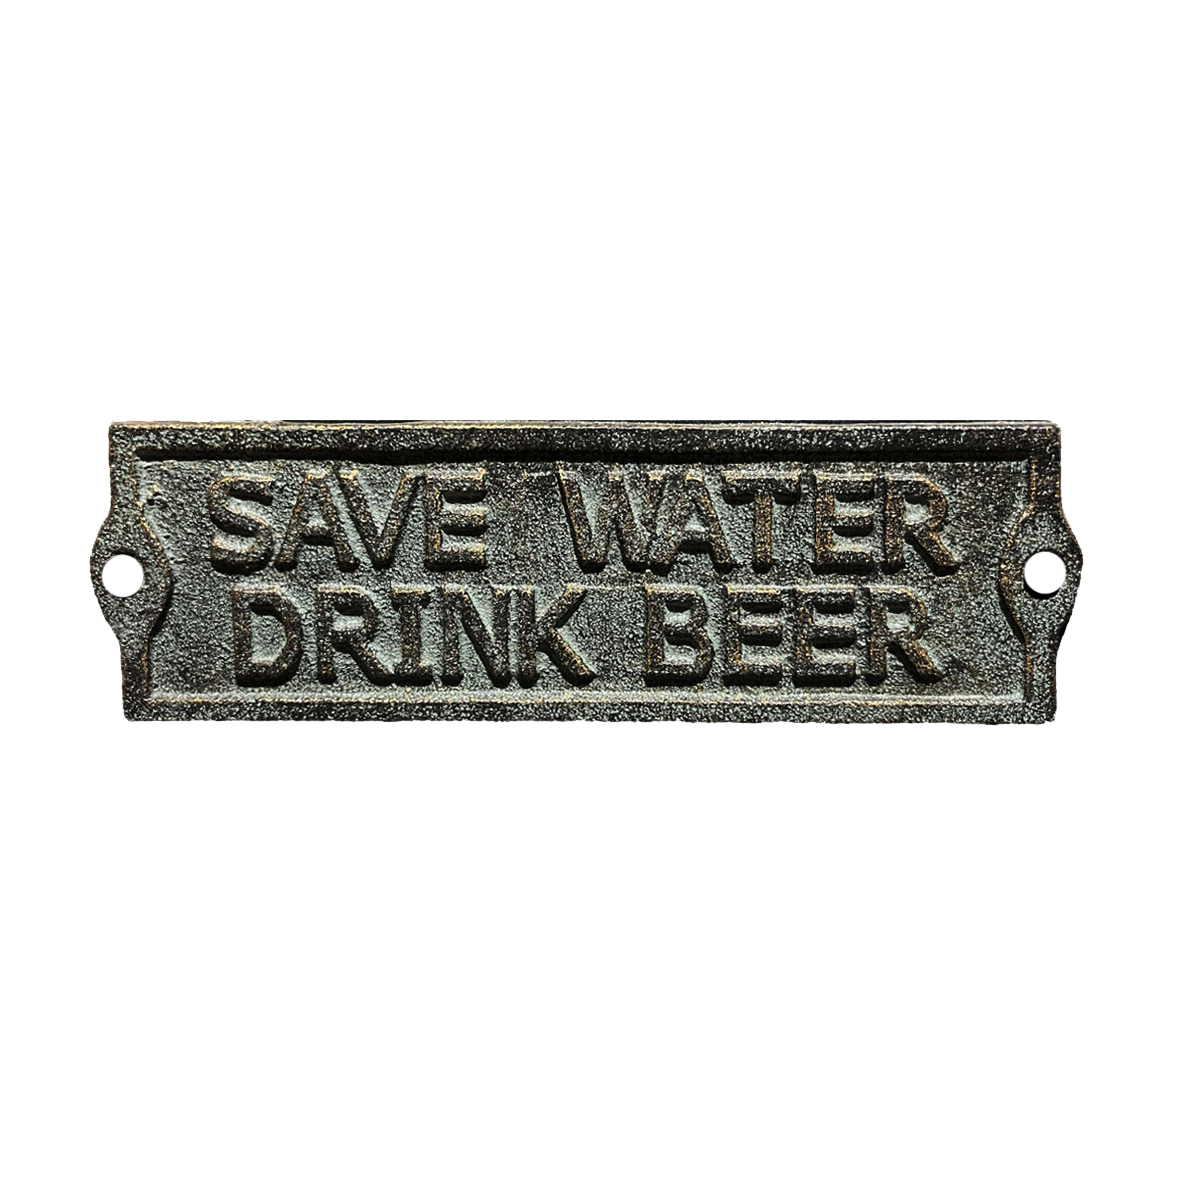 Placa "Save water"